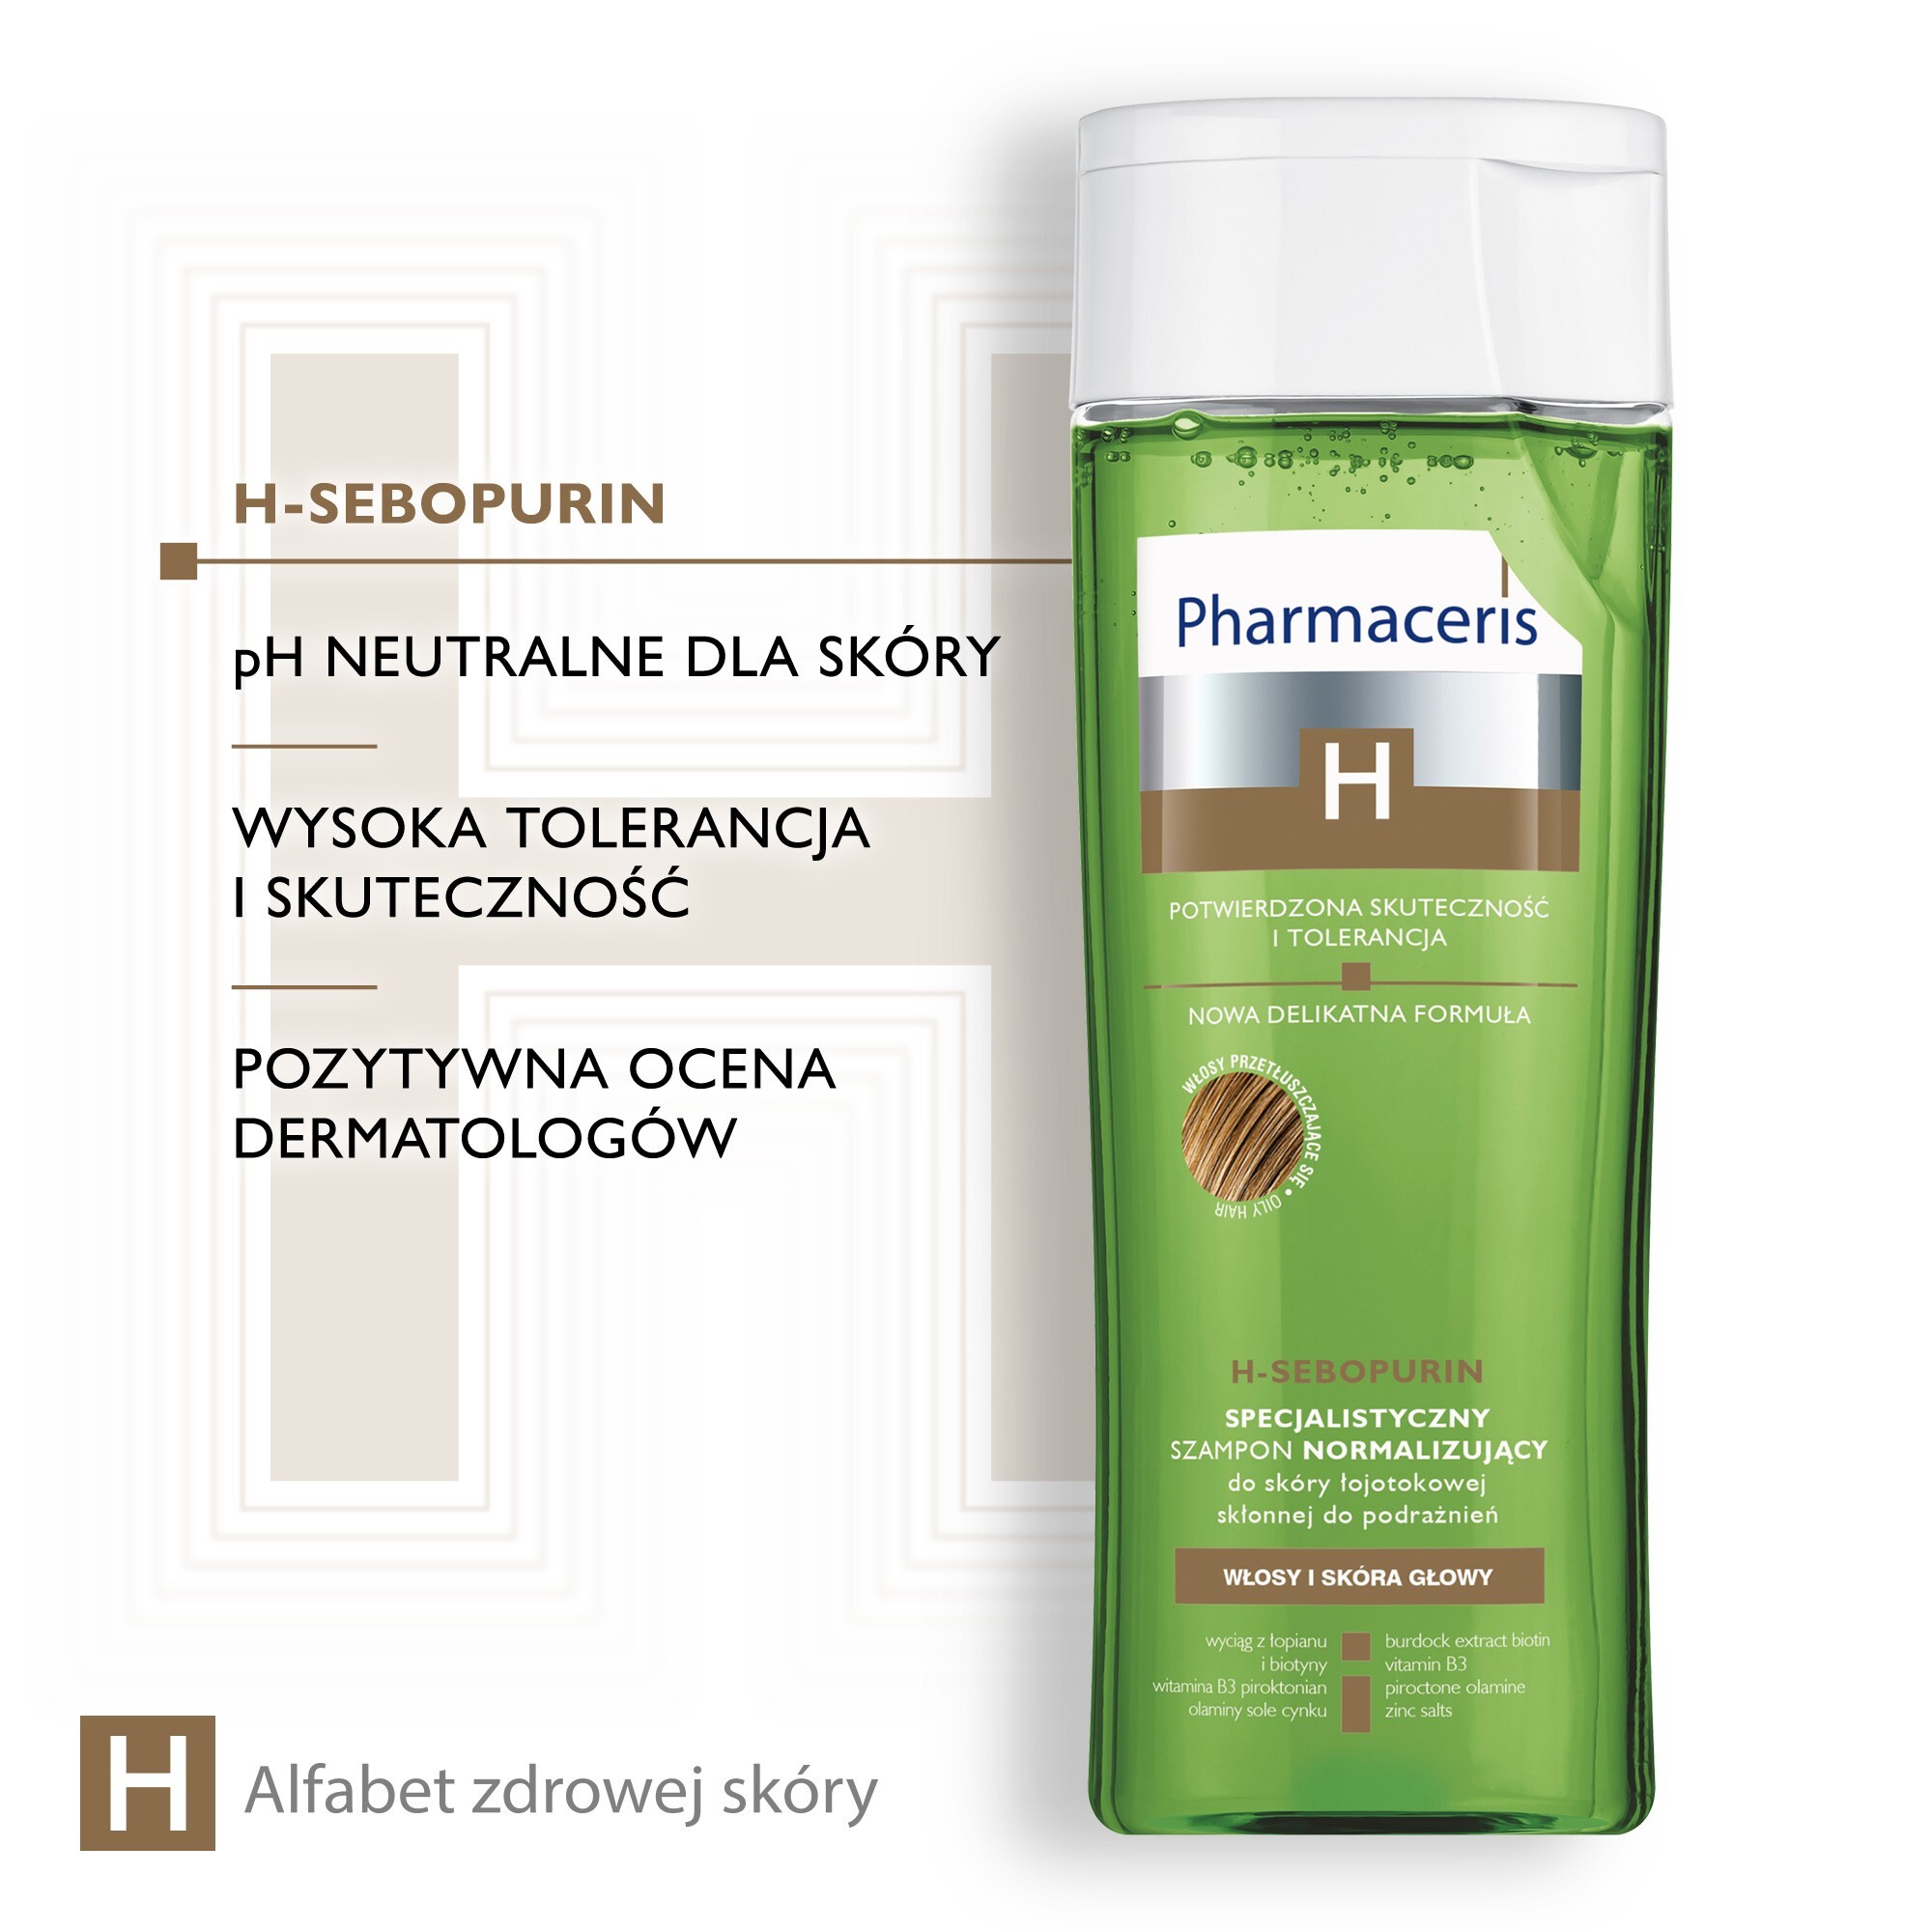 pharmaceris h sebopurin szampon specjalny do skóry łojotokowej